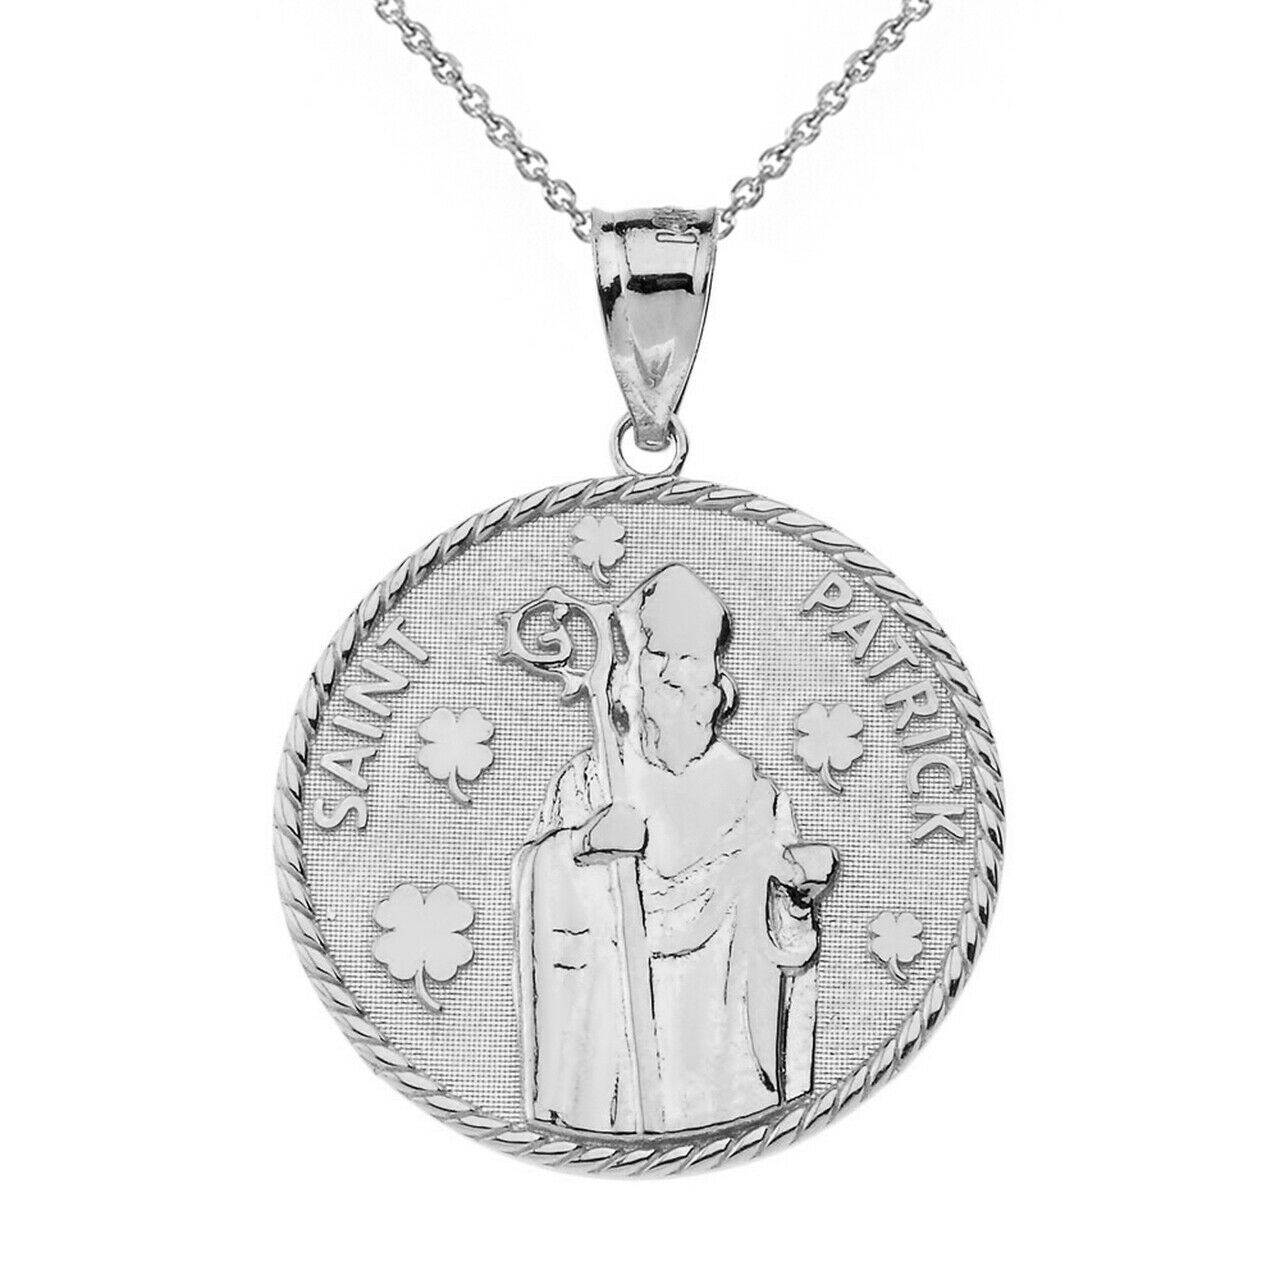 .925 Sterling Silver Saint Patrick Clovers Medallion Pendant Necklace